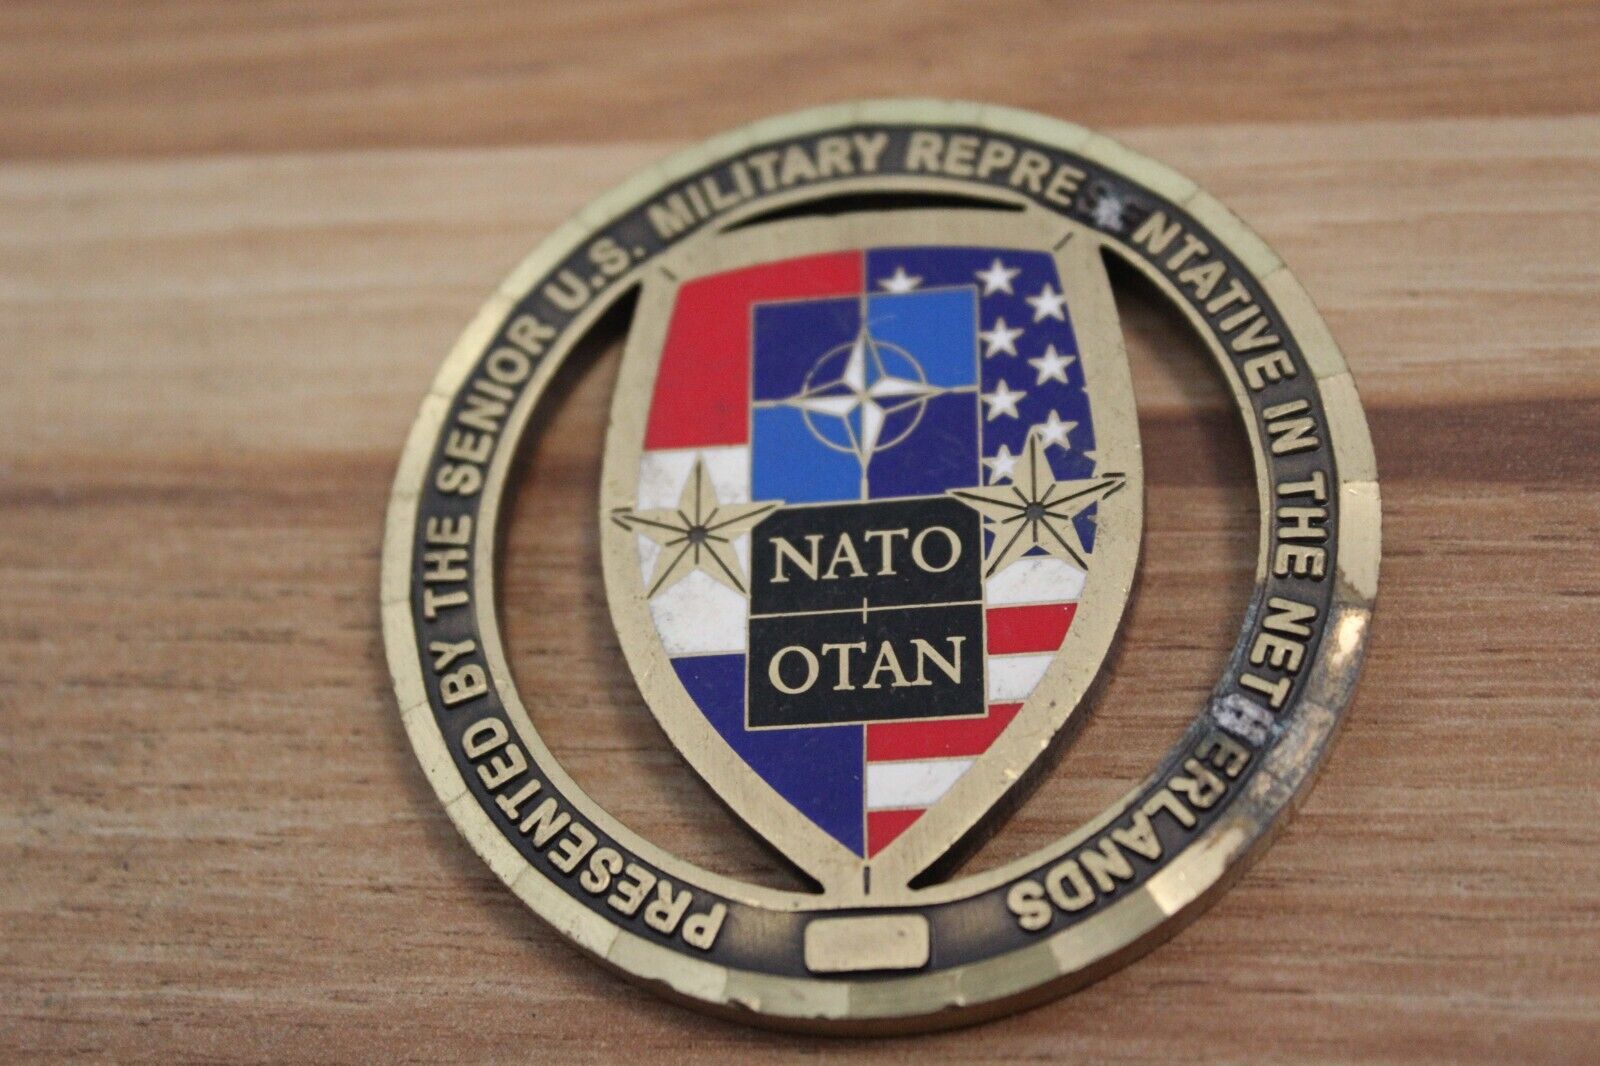 U.S. Military Representative in The Netherlands NATO Challenge Coin